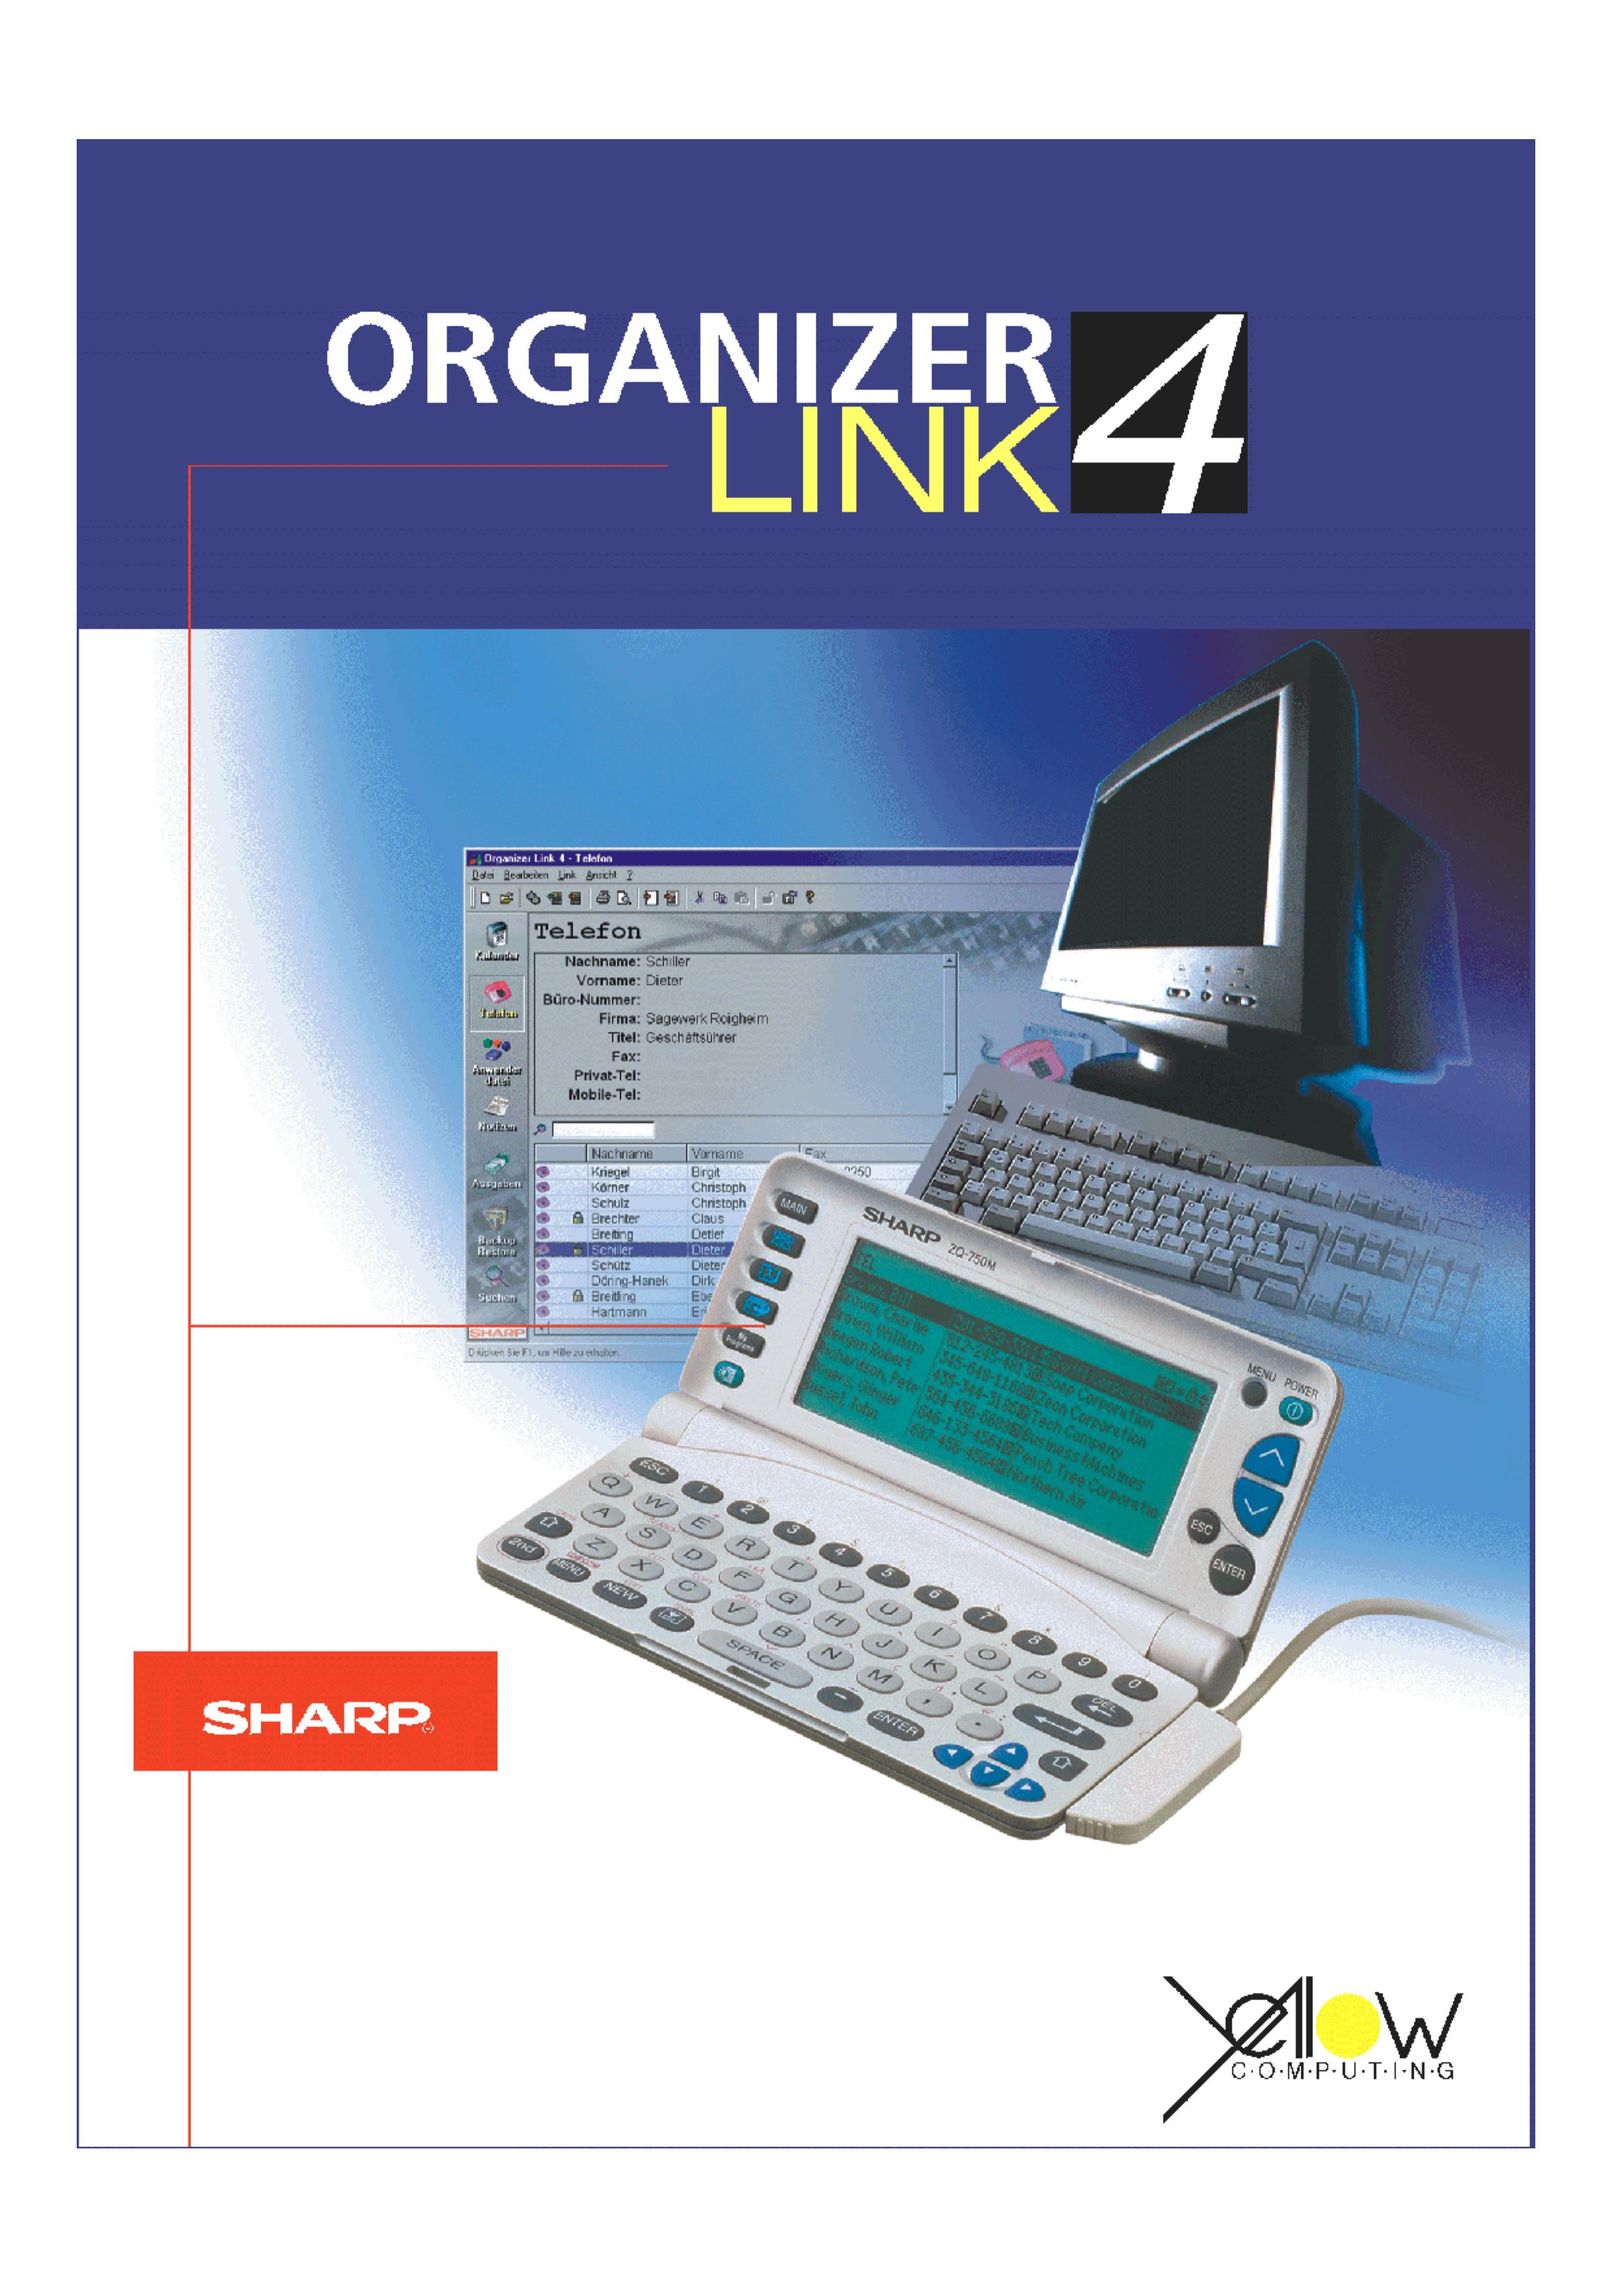 Sharp ORGANIZER Link4 PDAs & Smartphones User Manual